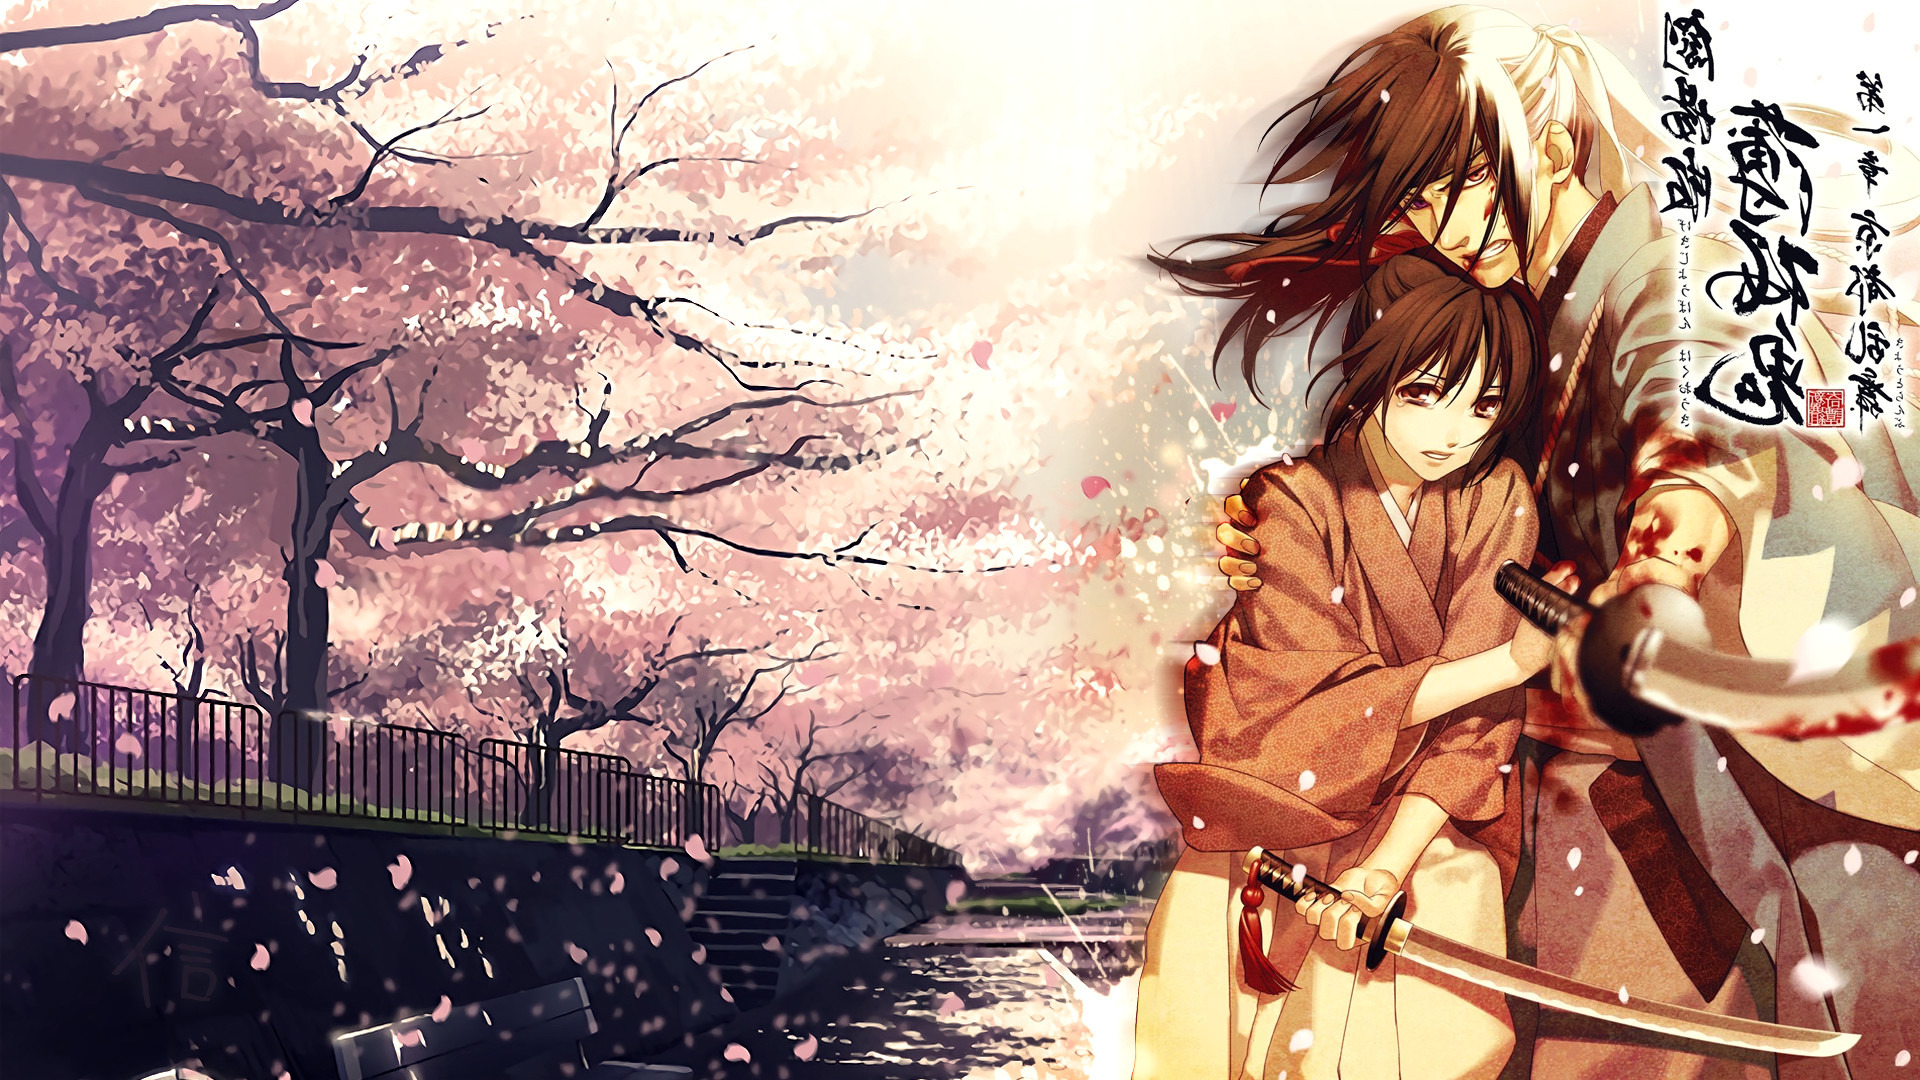 1920x1080 Anime - Hakuouki Shinsengumi Kitan Blut Man MÃ¤dchen Tears Sakura Blossom  Baum Katana Samurai Anime Wallpaper